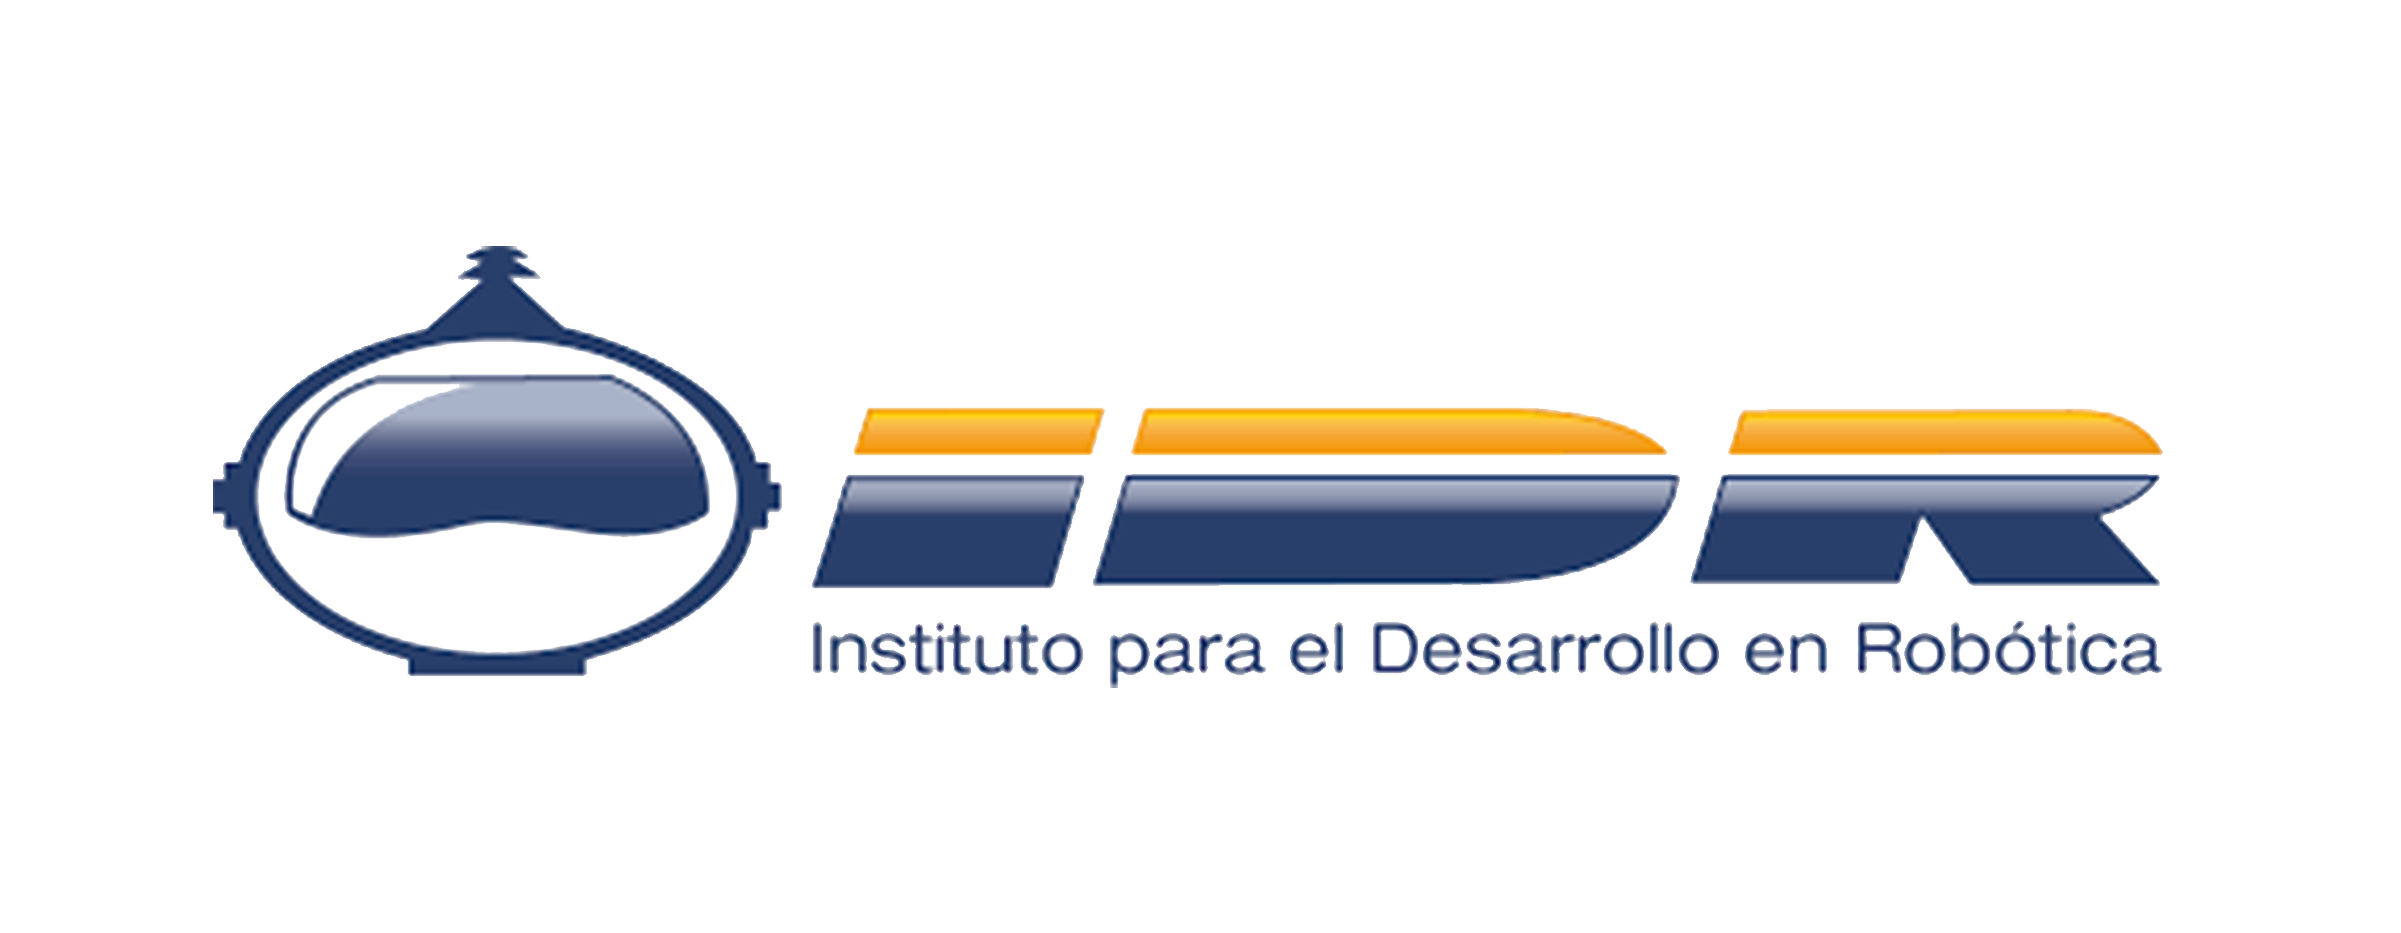 Logo del Instituto para el Desarrollo en Robótica (I D NR)